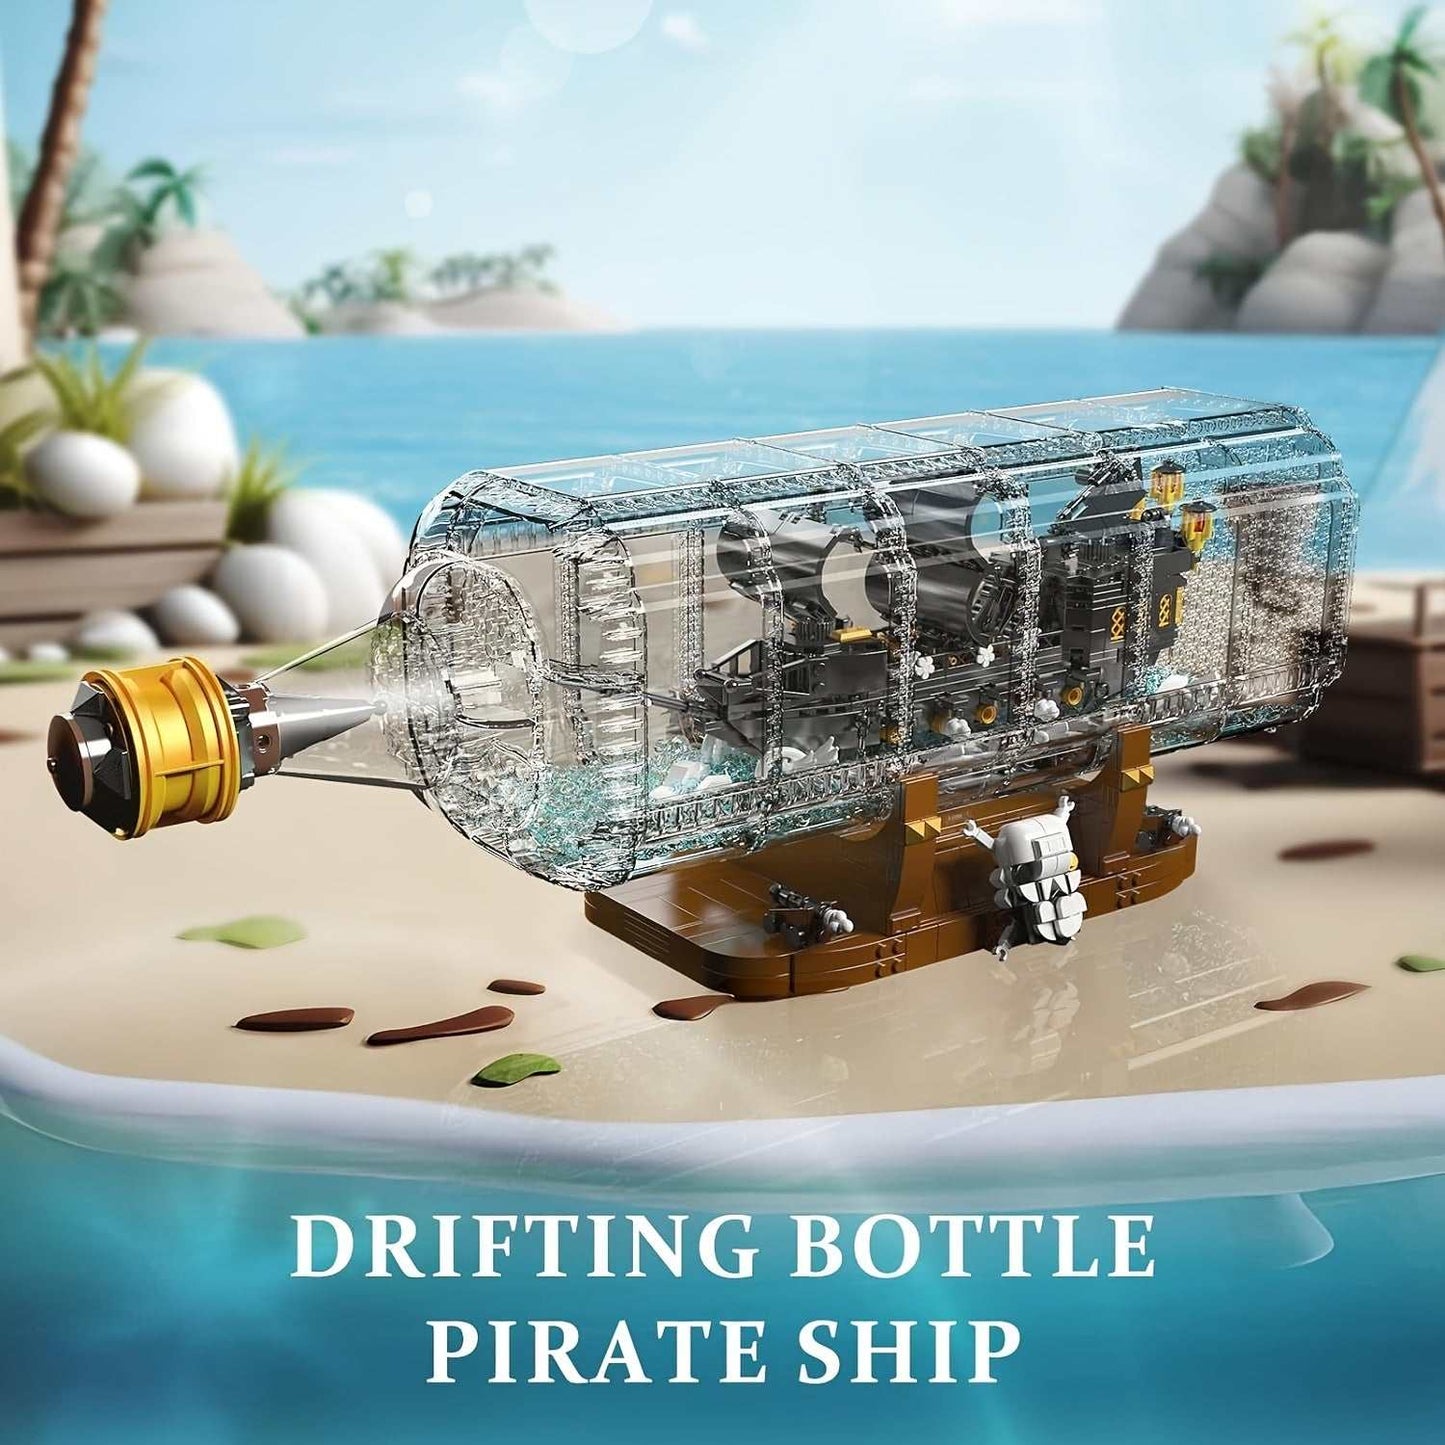 2206pcs Pirate ship in a bottle